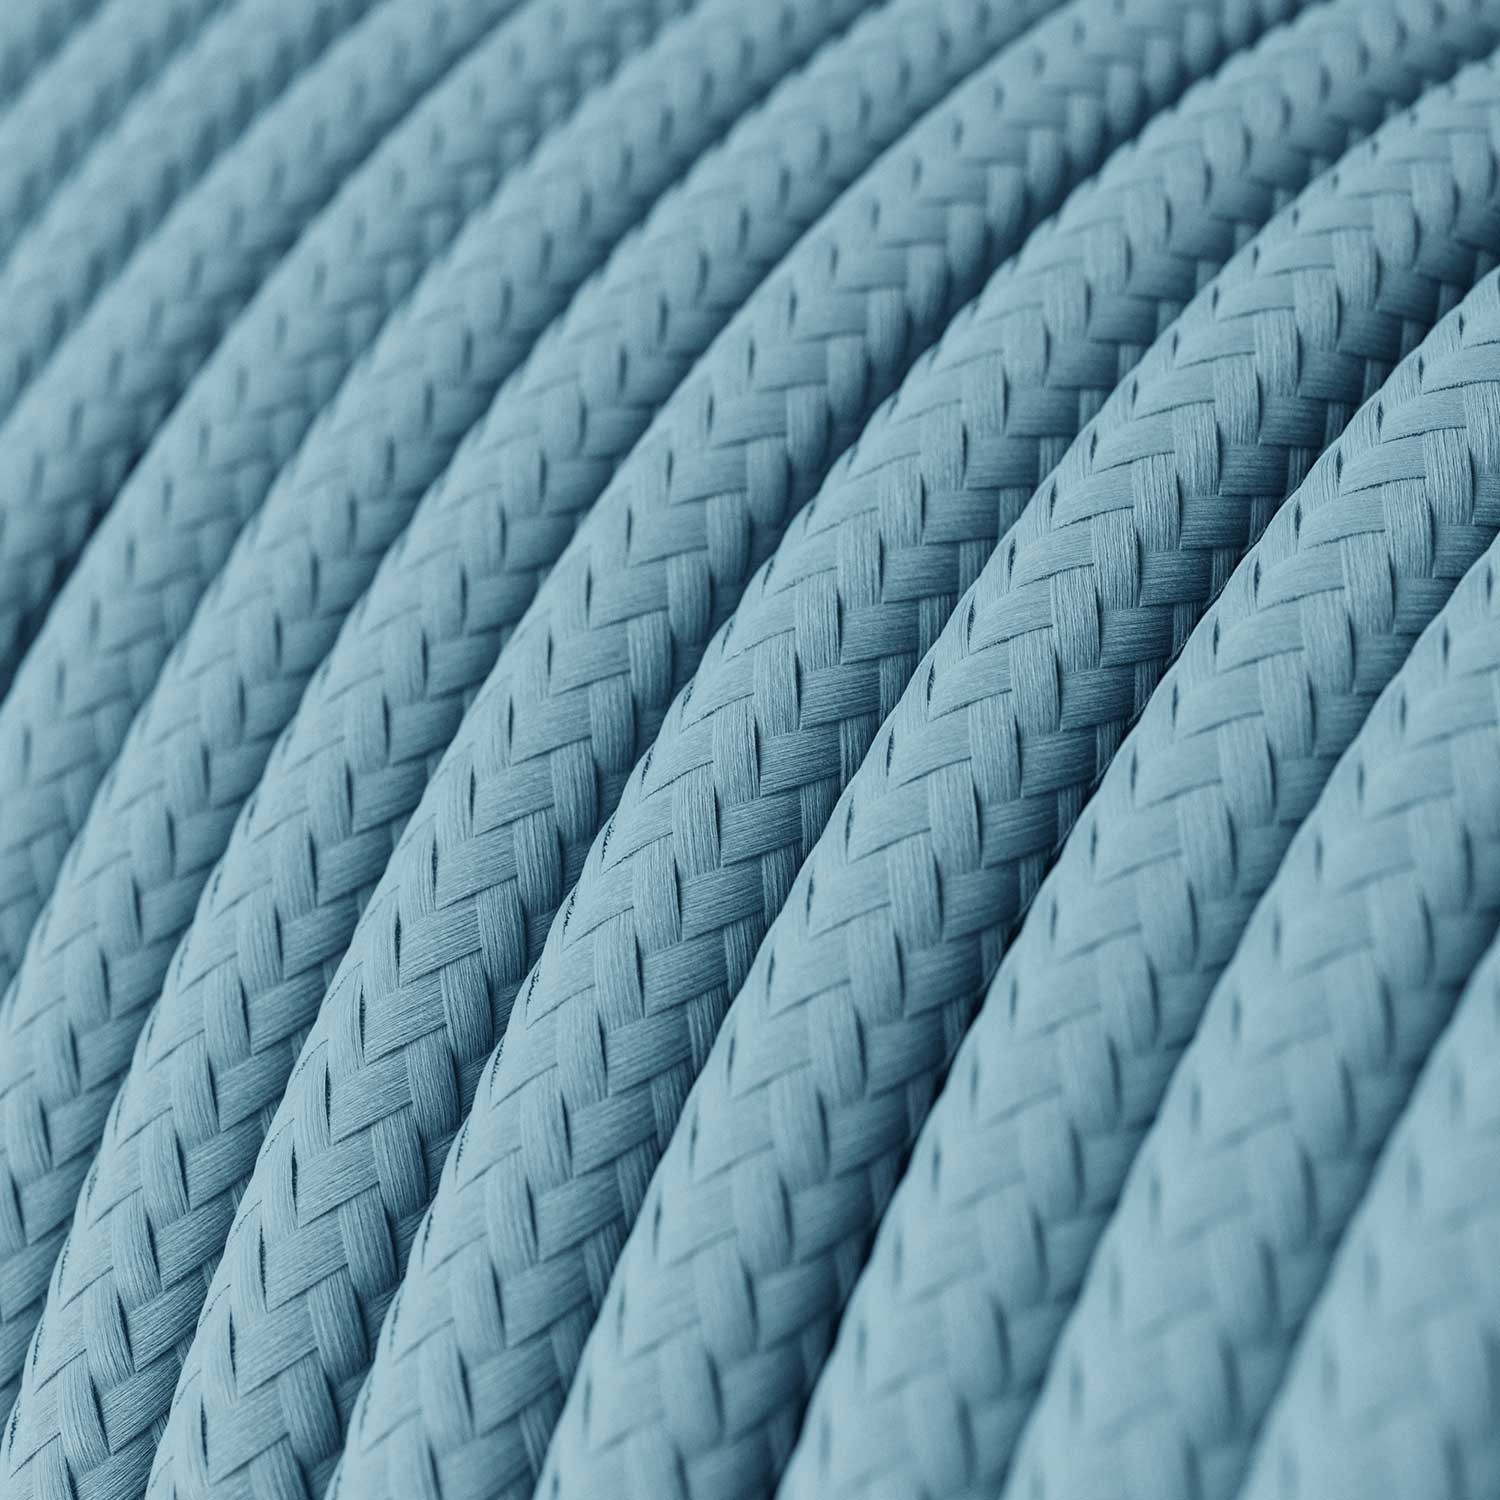 Okrugli tekstilni električni kabel RM17- Baby Blue